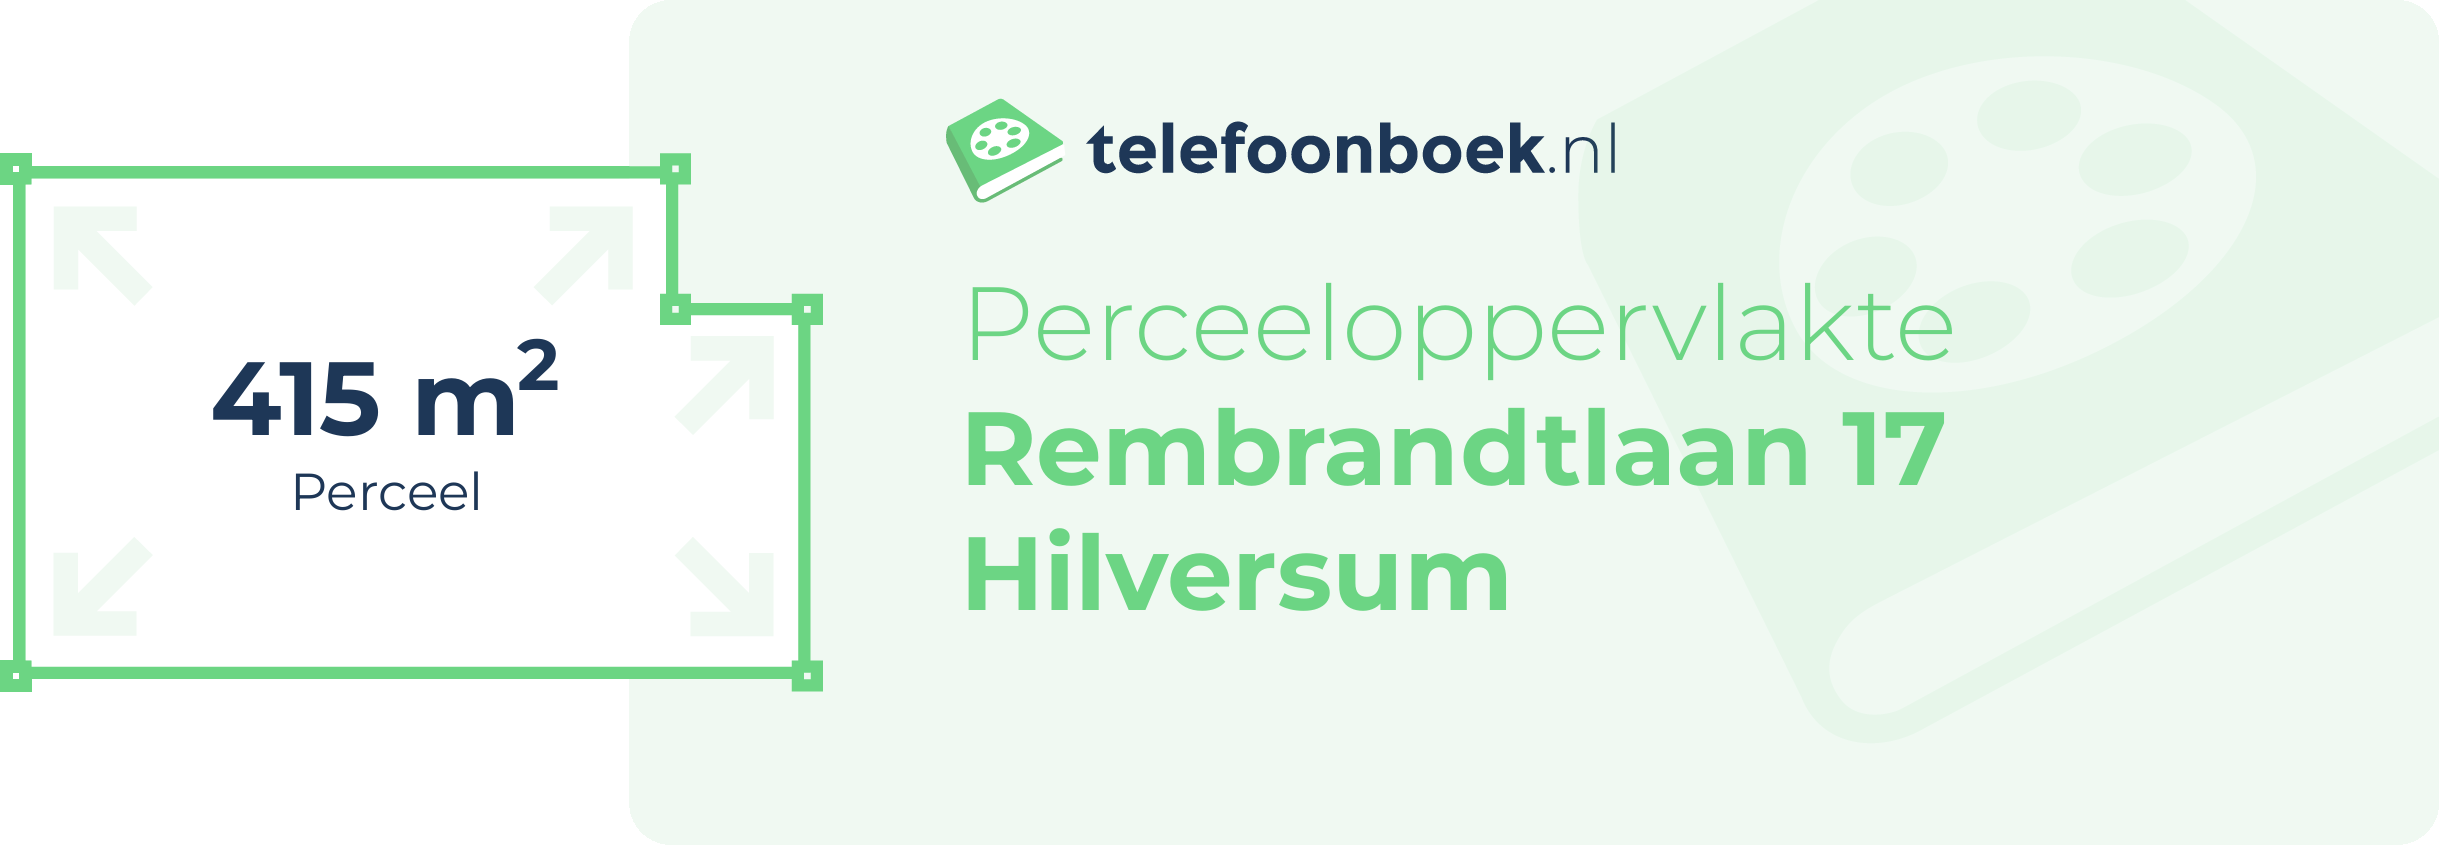 Perceeloppervlakte Rembrandtlaan 17 Hilversum